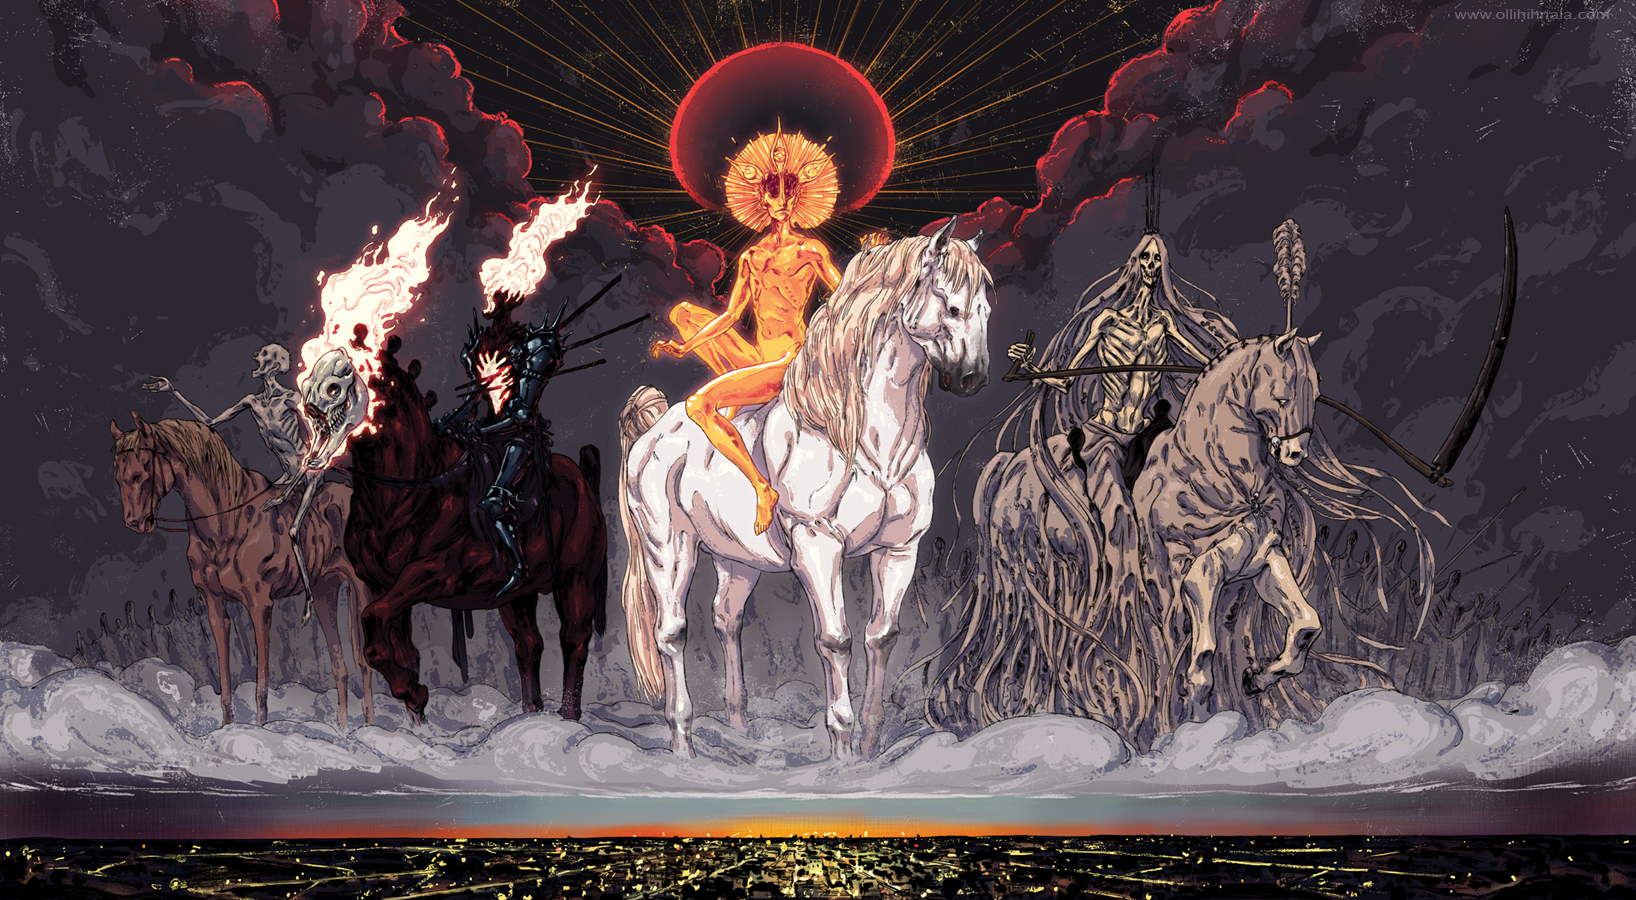 the Four Horsemen of the Apocalypse by korintic on